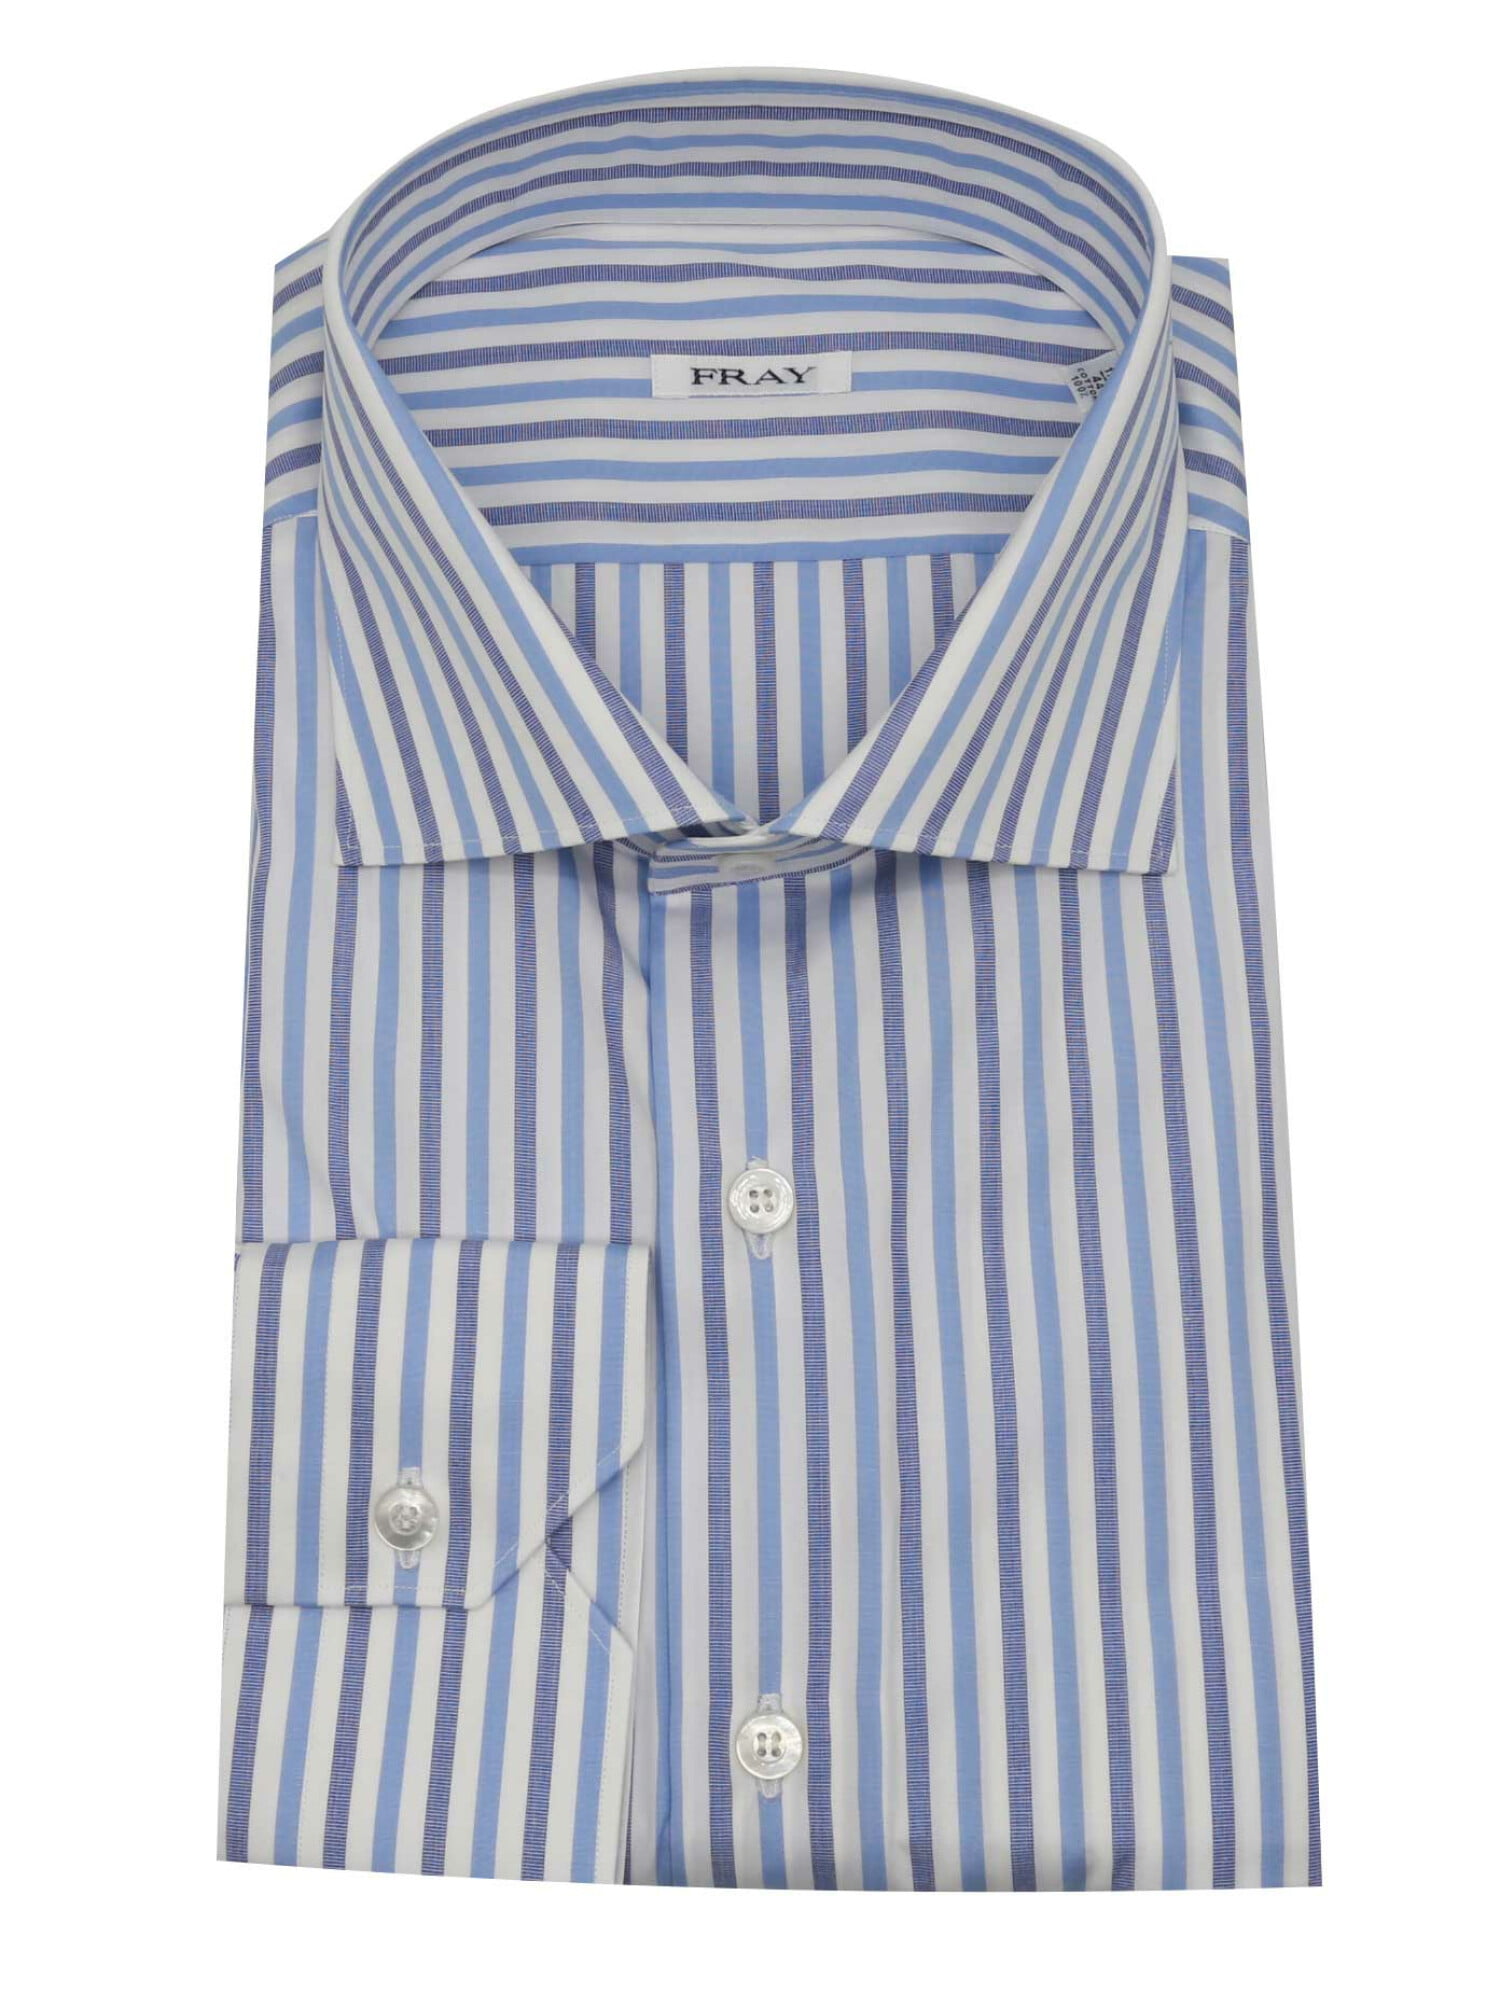 New Kiton White/Denim Blue Stripe Cotton Dress Shirt 